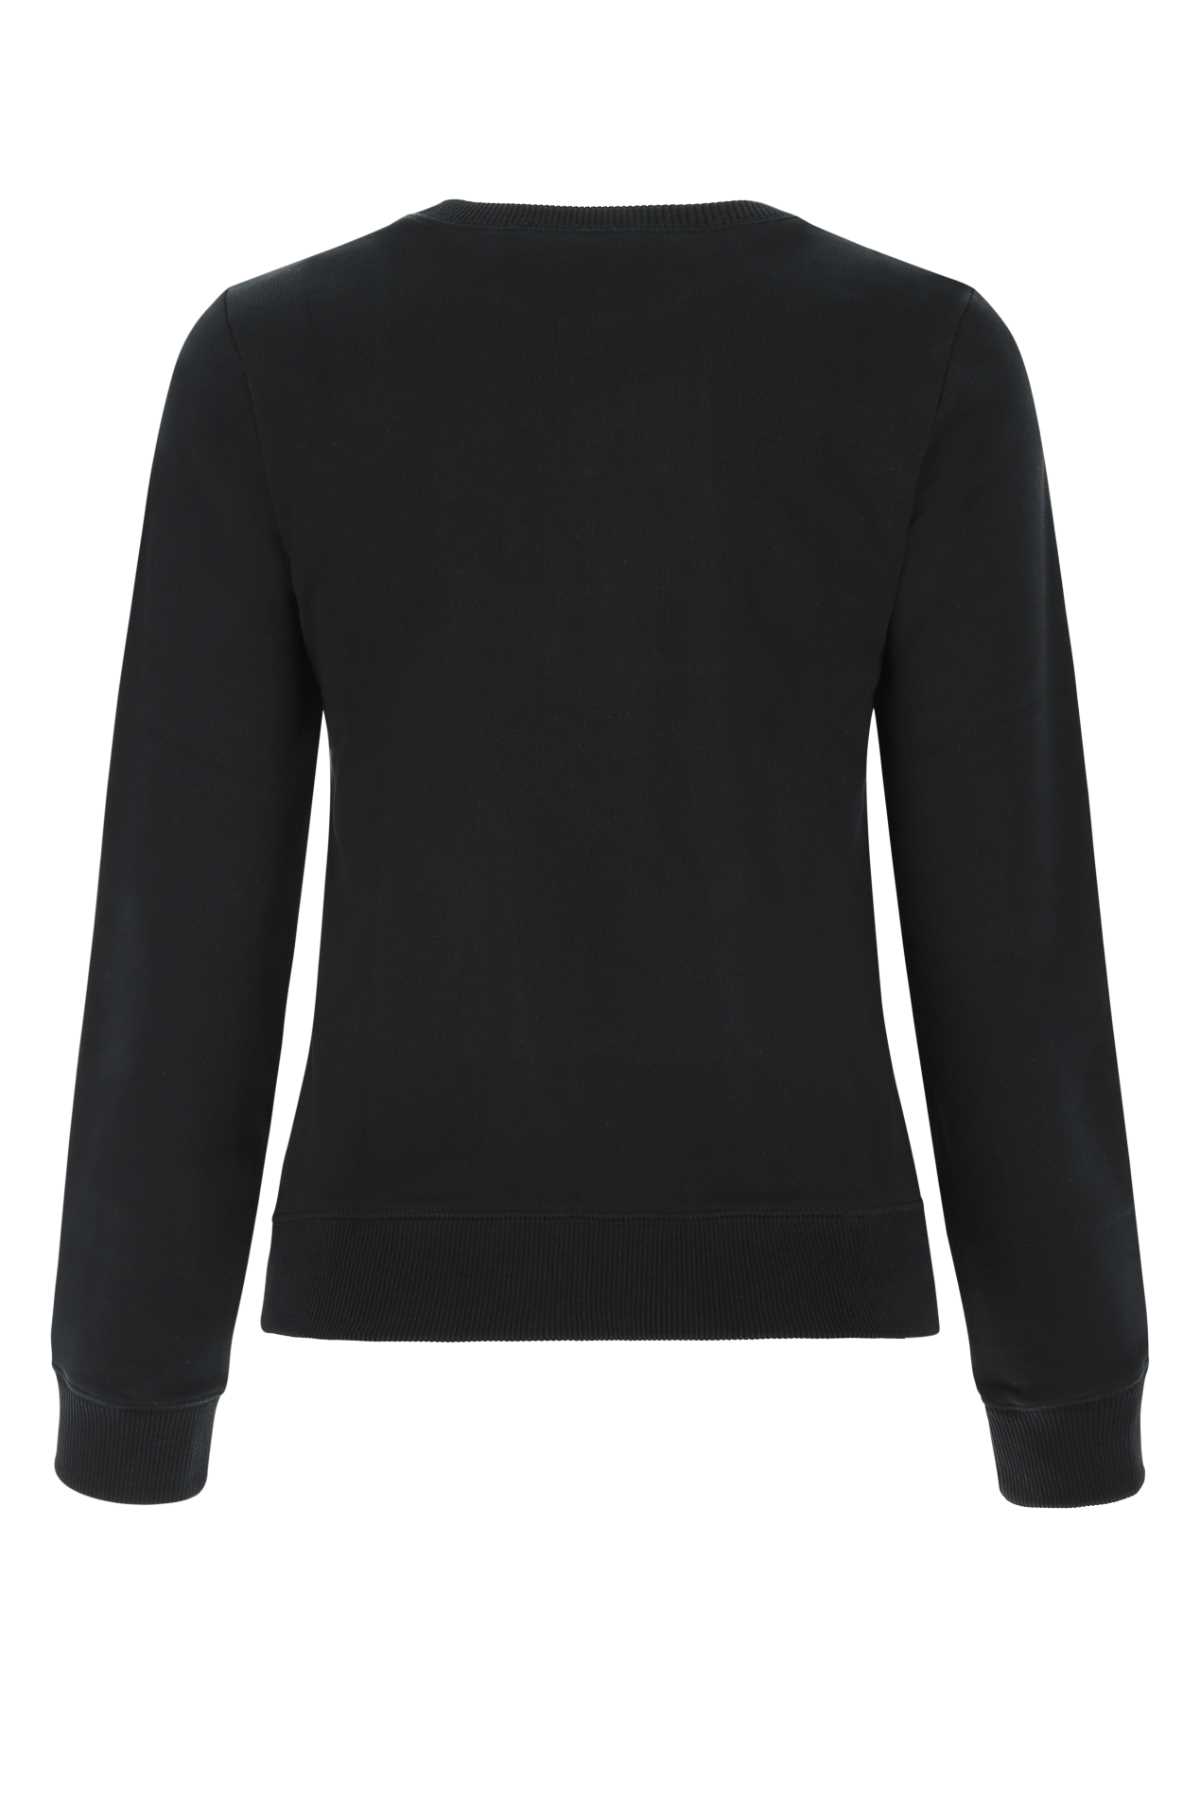 Apc Black Cotton Sweatshirt In Lzz